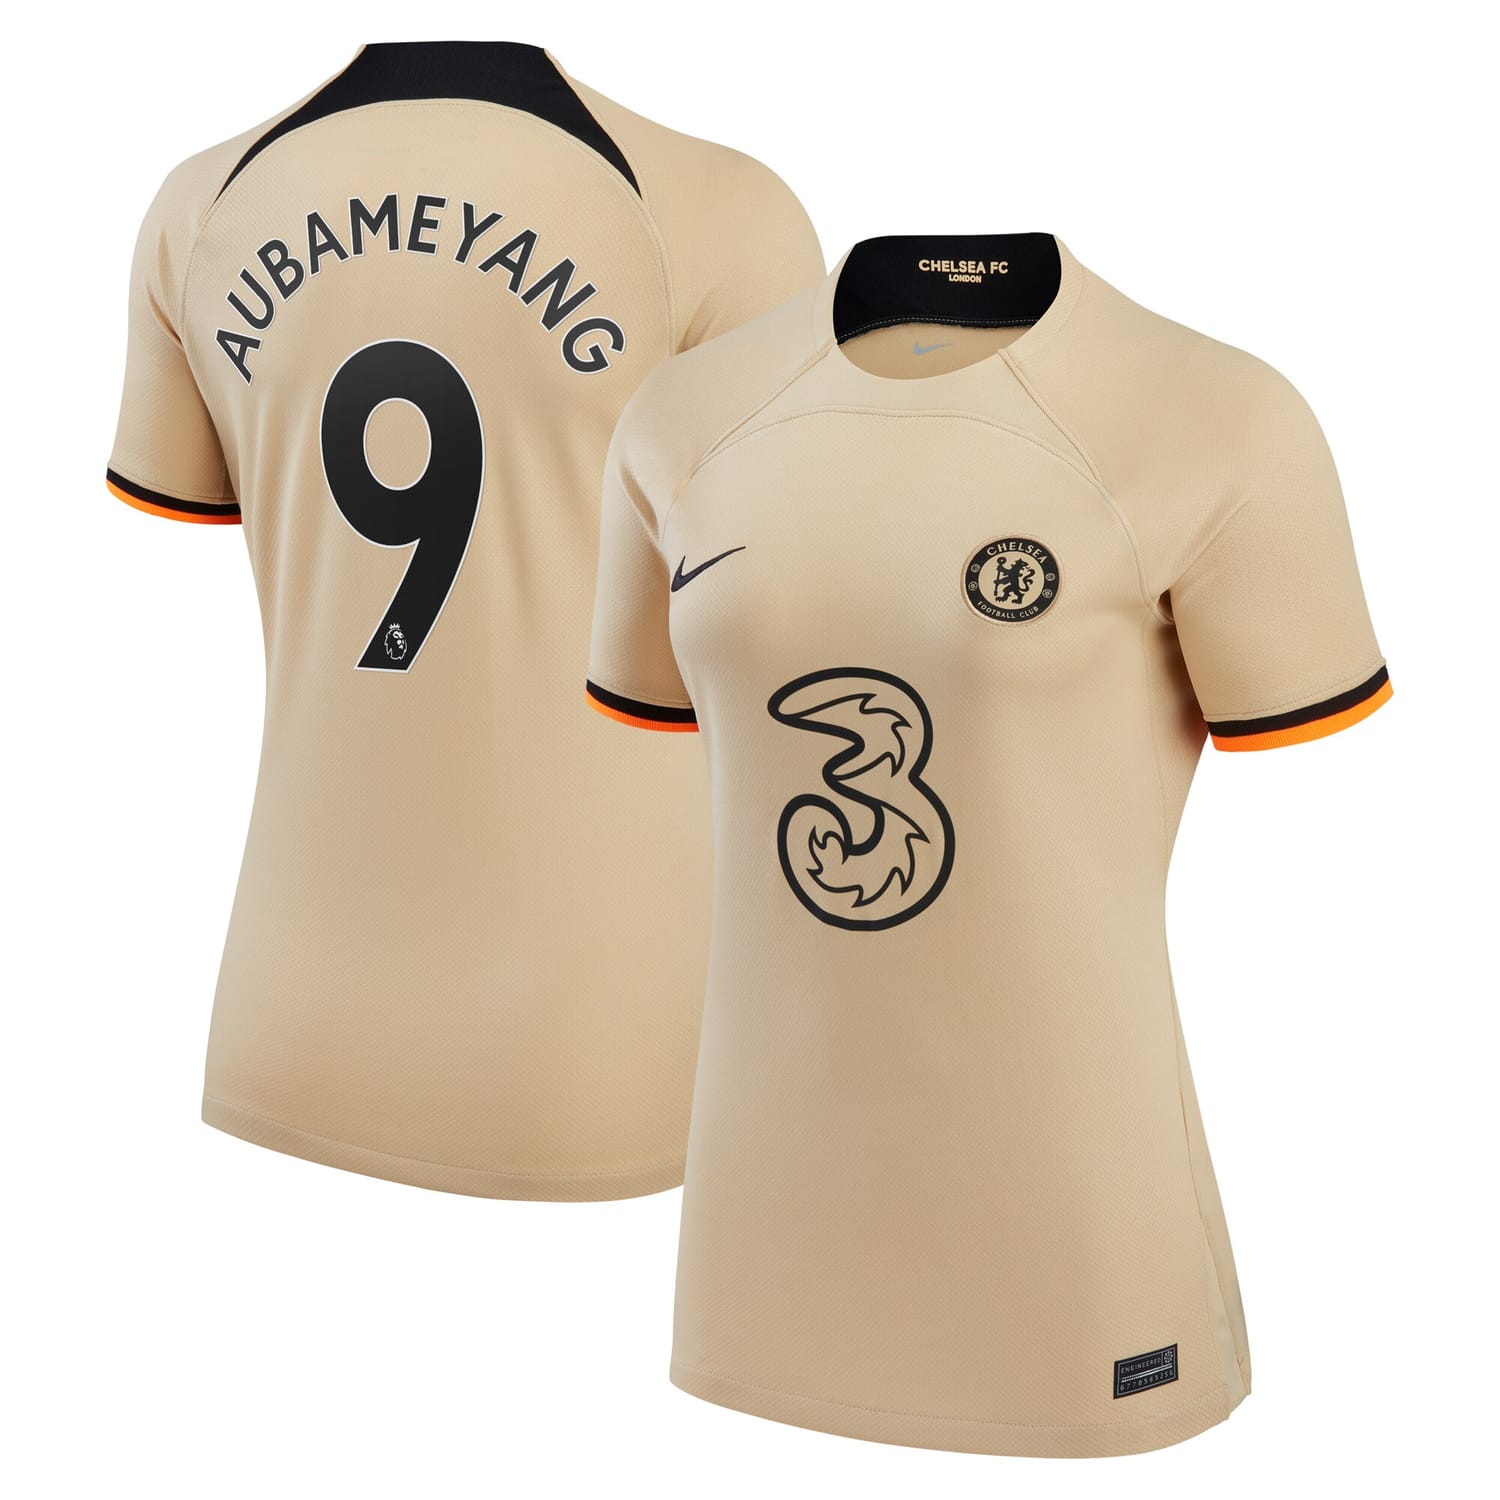 Premier League Chelsea Home Jersey Shirt Gold 2022-23 player Pierre-Emerick Aubameyang printing for Women